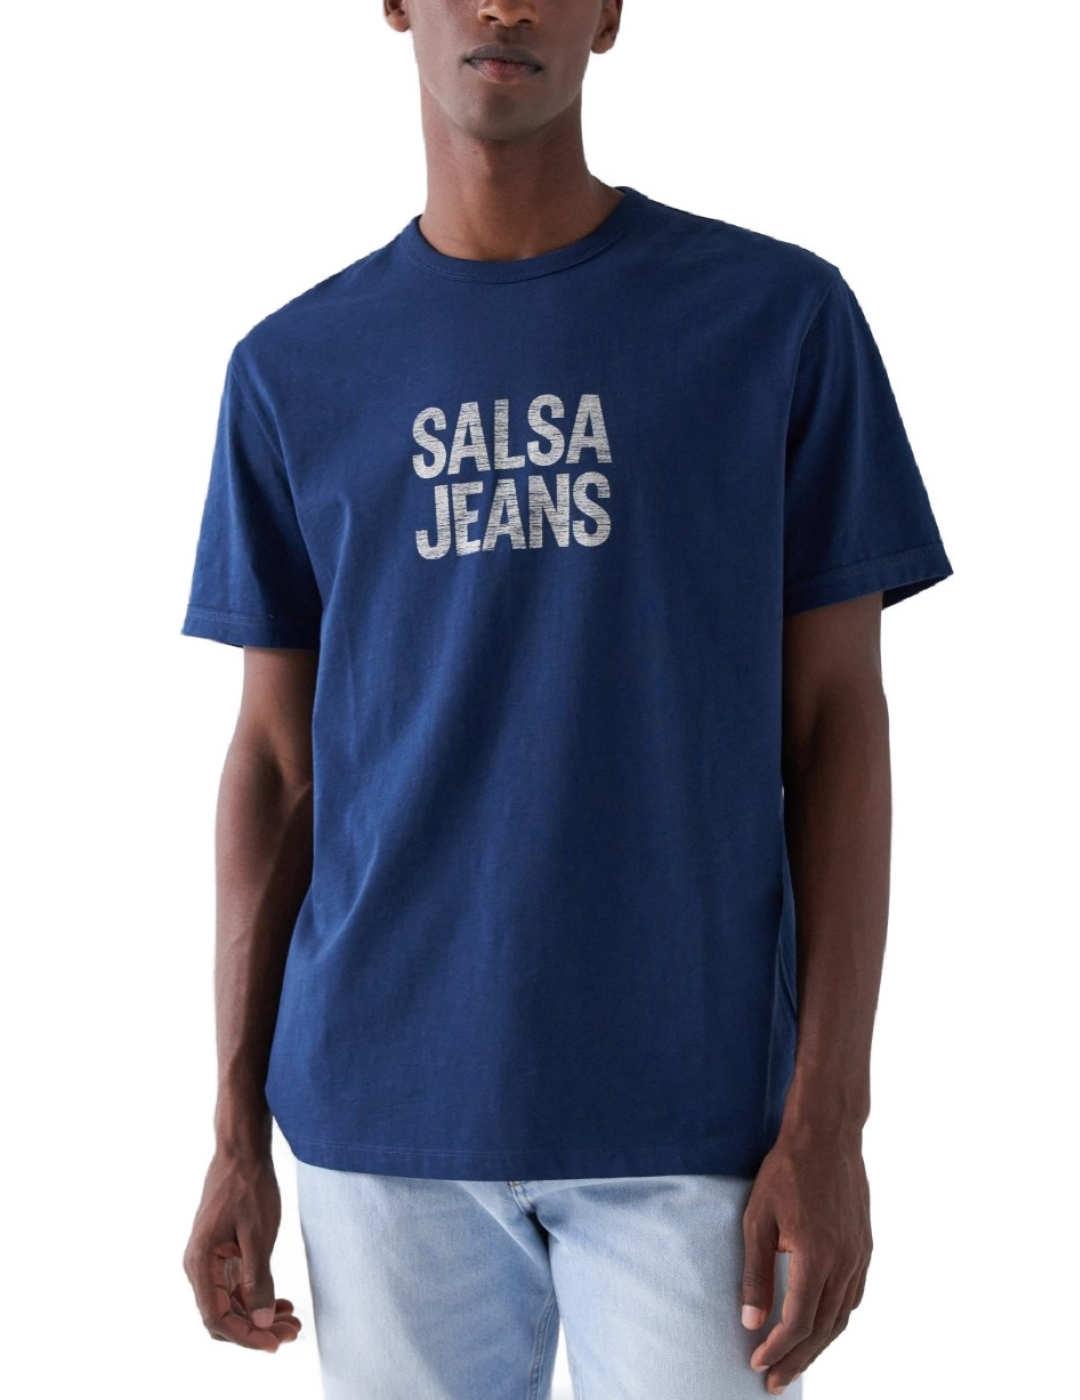 Camiseta Salsa azul logo blanco manga corta para hombre